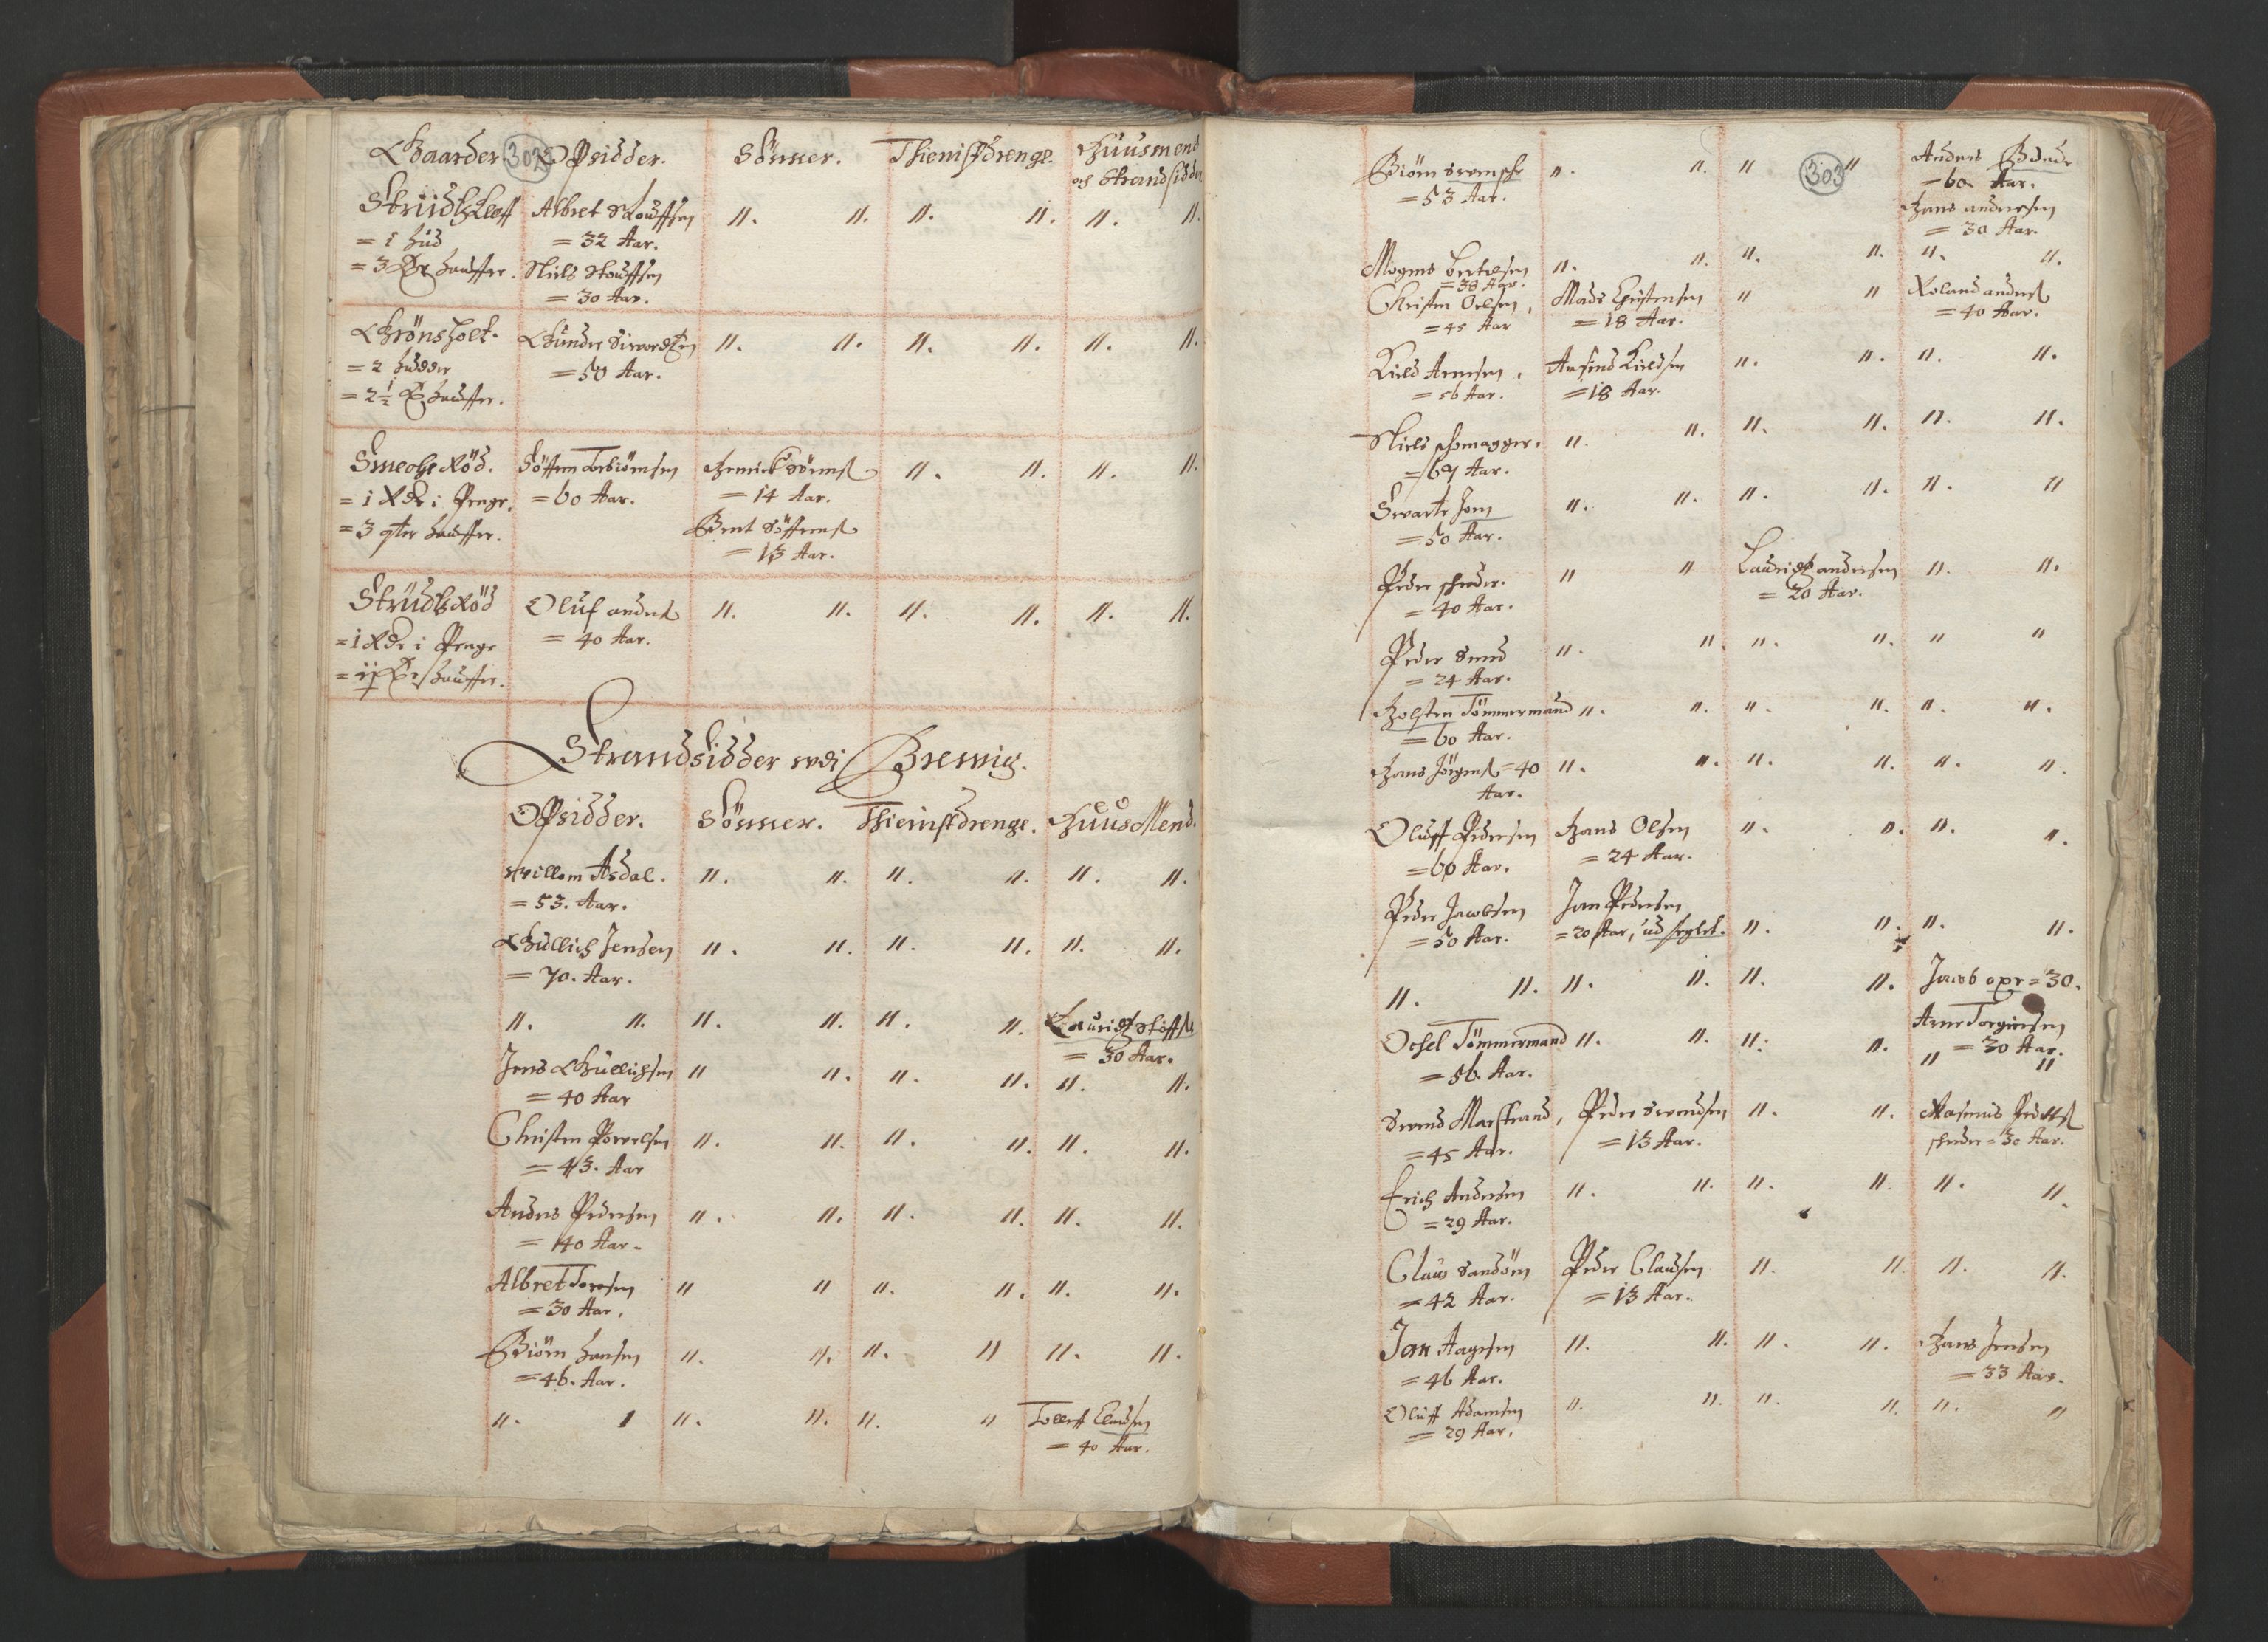 RA, Vicar's Census 1664-1666, no. 12: Øvre Telemark deanery, Nedre Telemark deanery and Bamble deanery, 1664-1666, p. 302-303